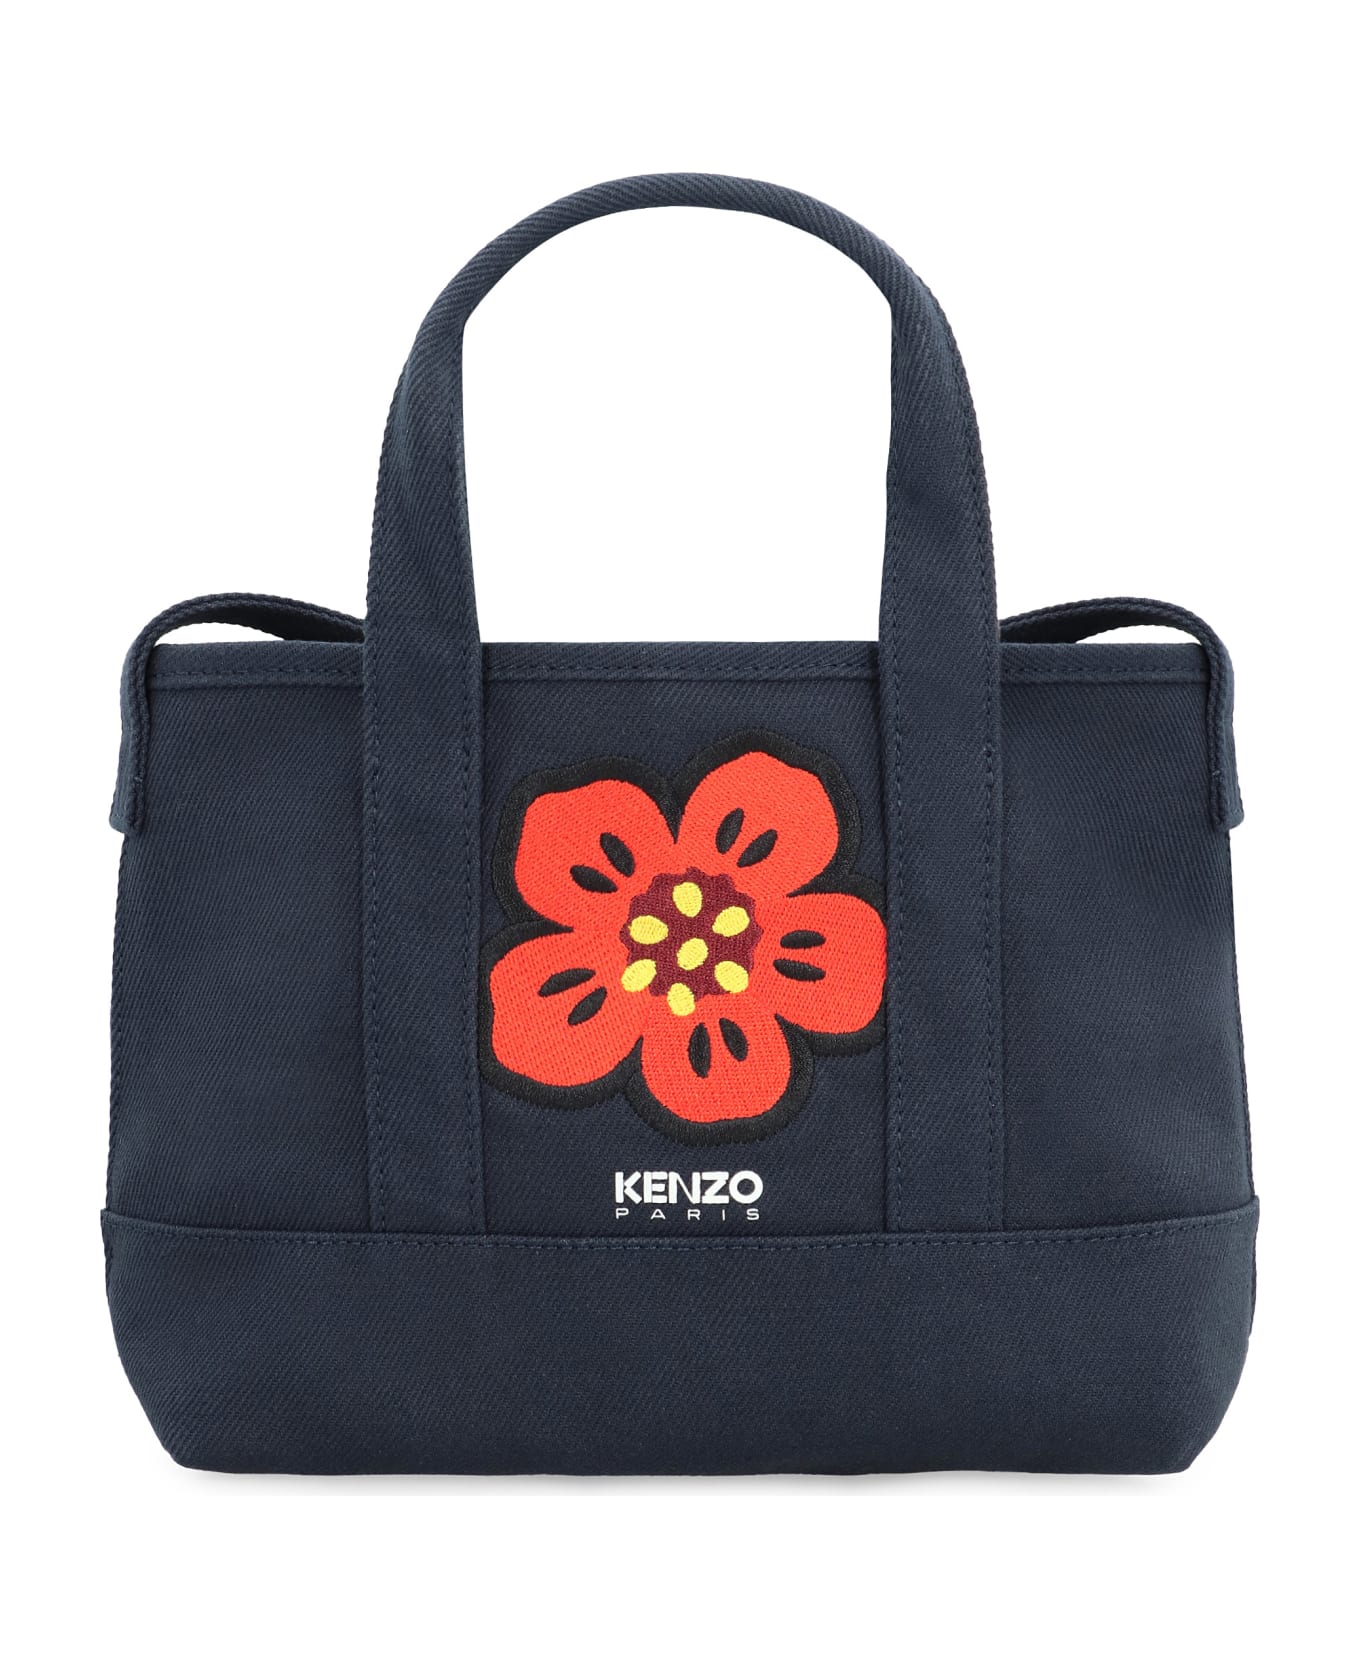 Kenzo Tote Bag - blue